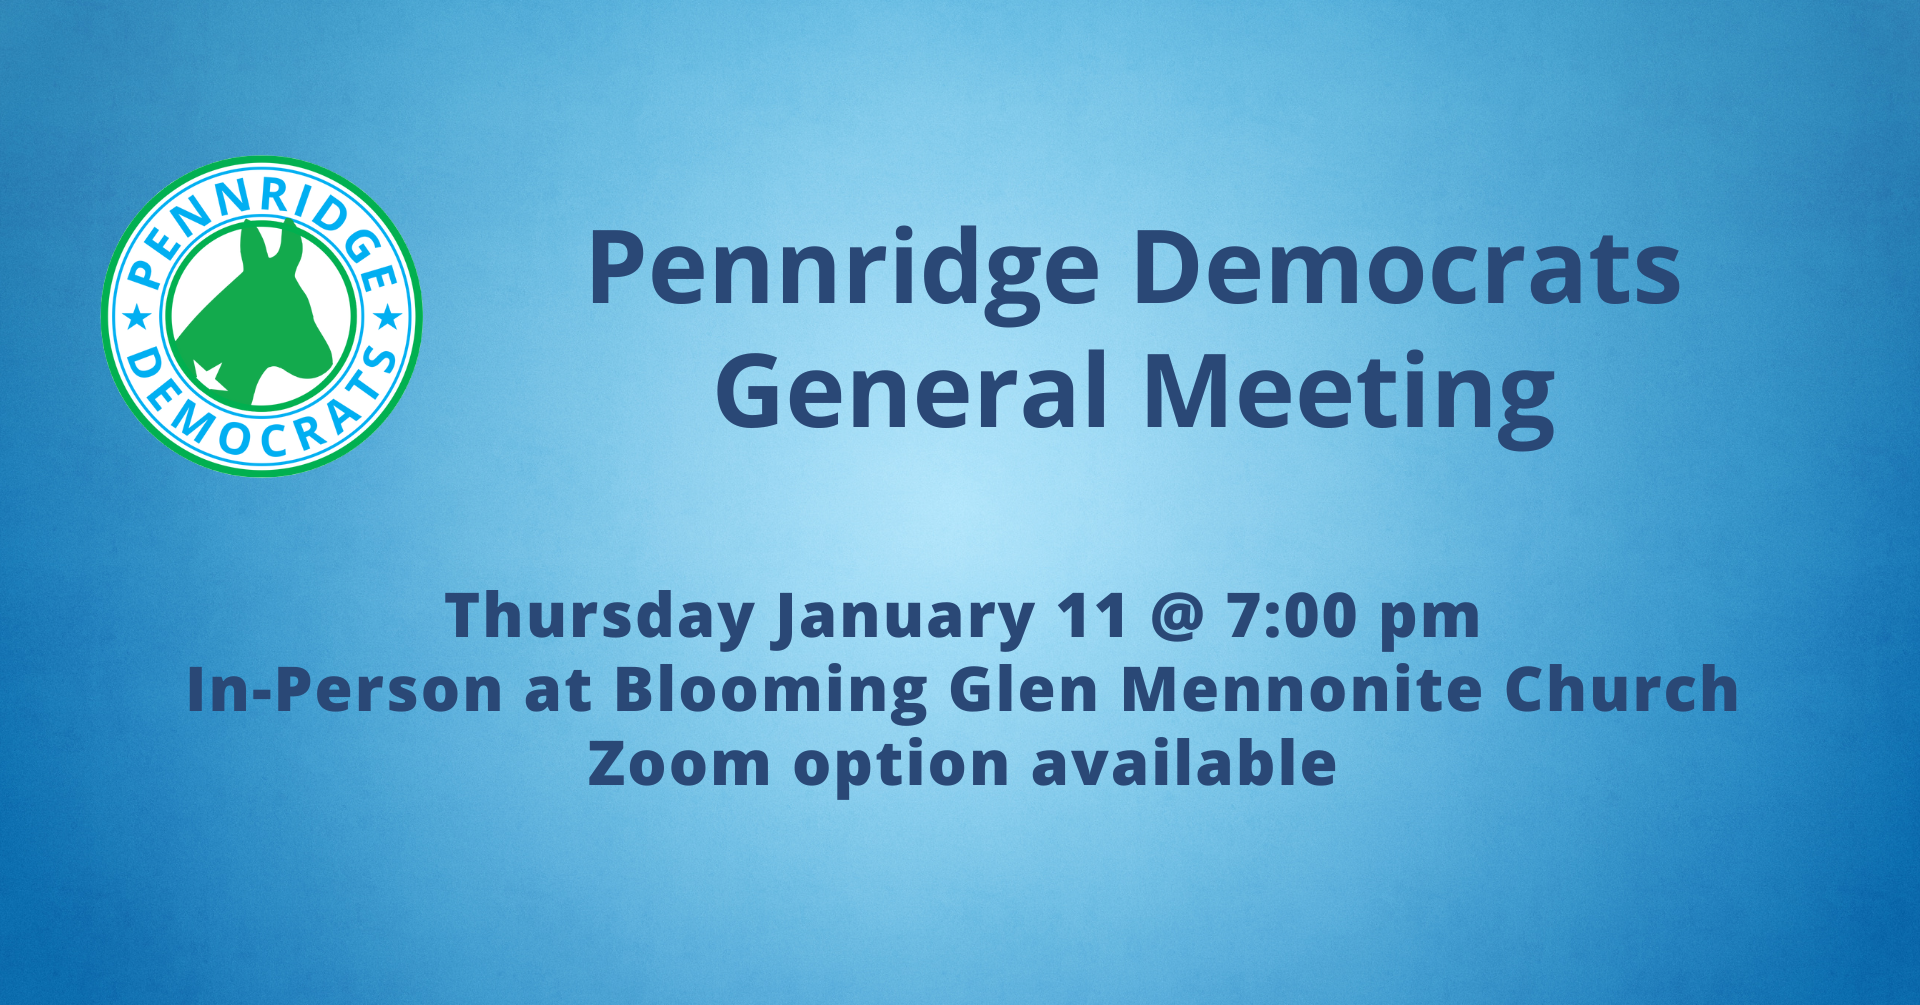 Pennridge Democrats General Meeting - Thursday January 11 at 7:00 pm.